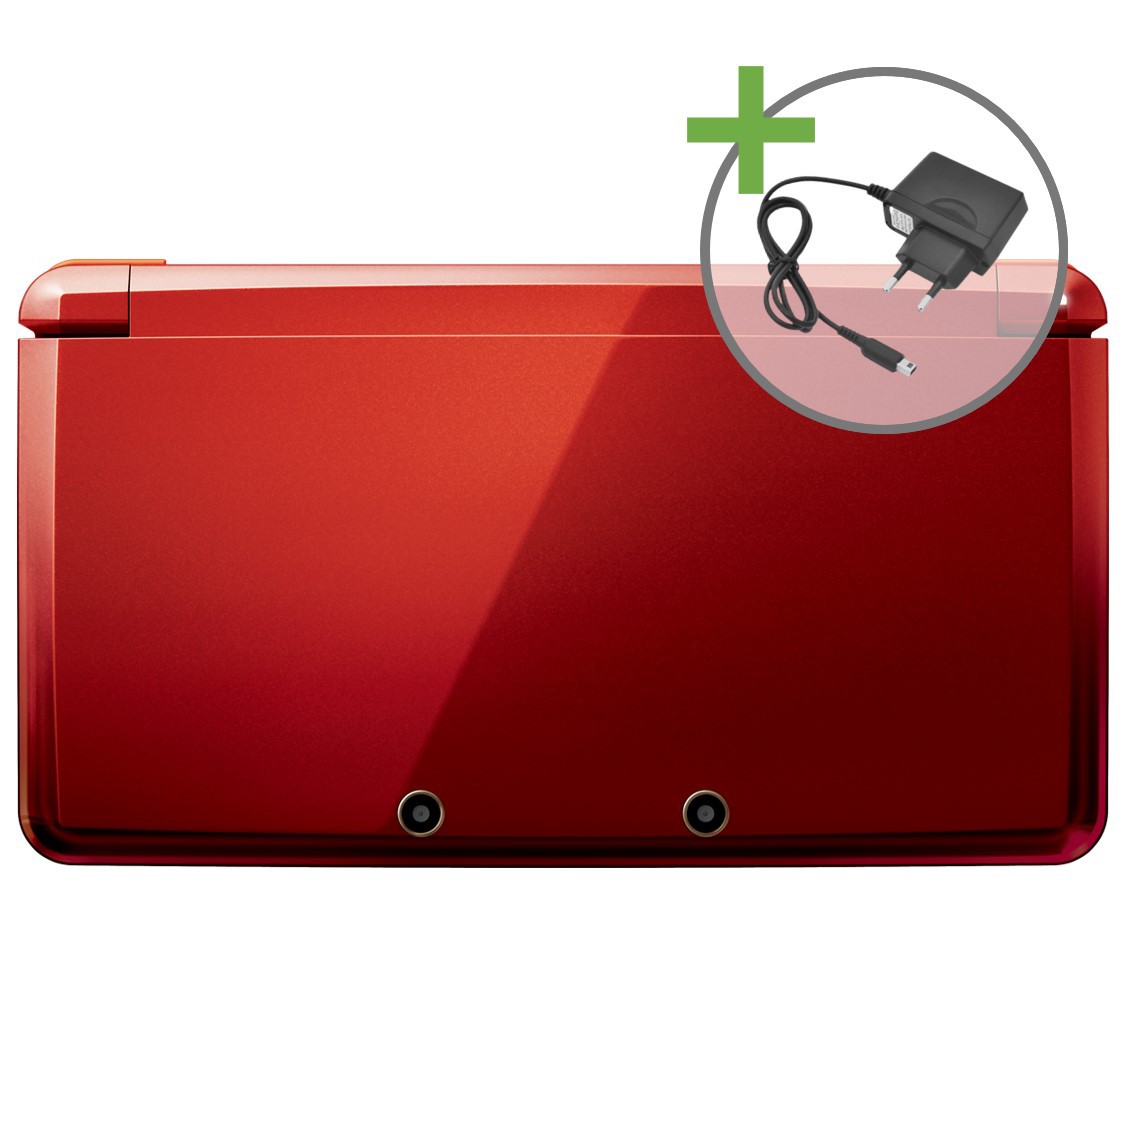 Nintendo 3DS - Metallic Red - Nintendo 3DS Hardware - 3